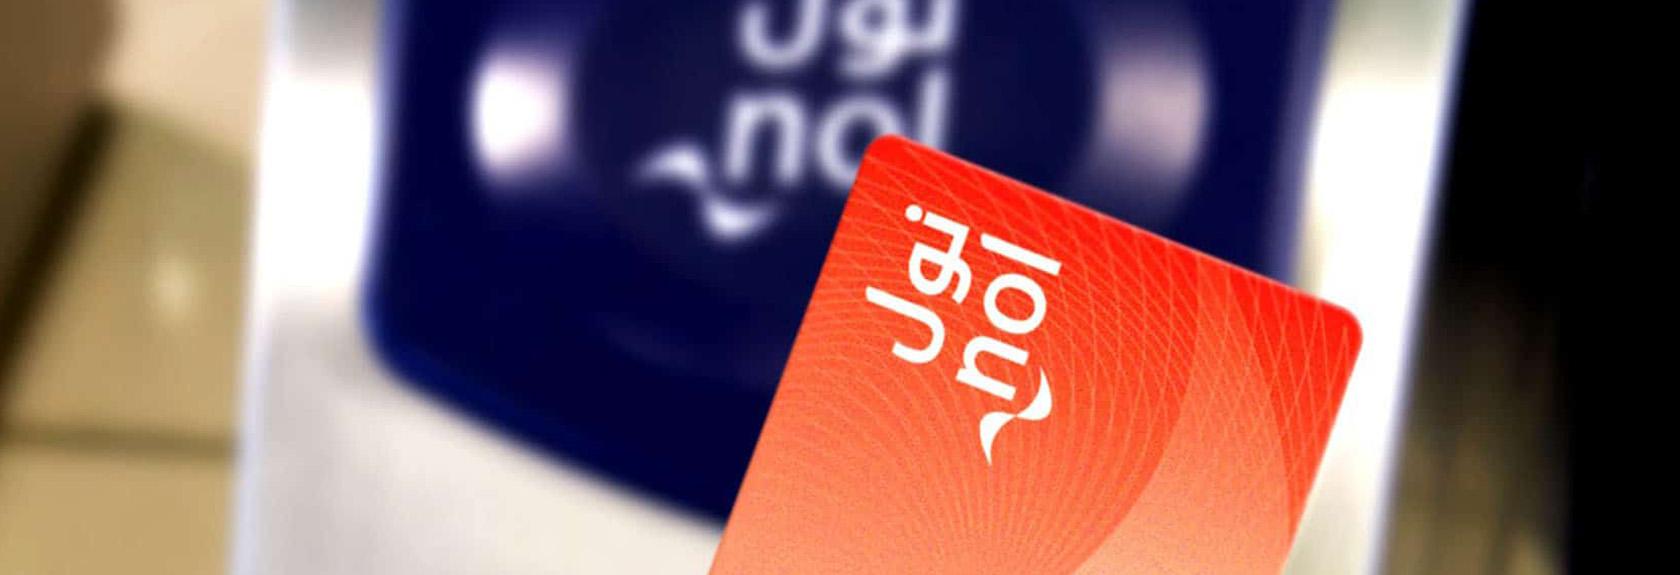 Dubai NOL Metro Card + SIM Card